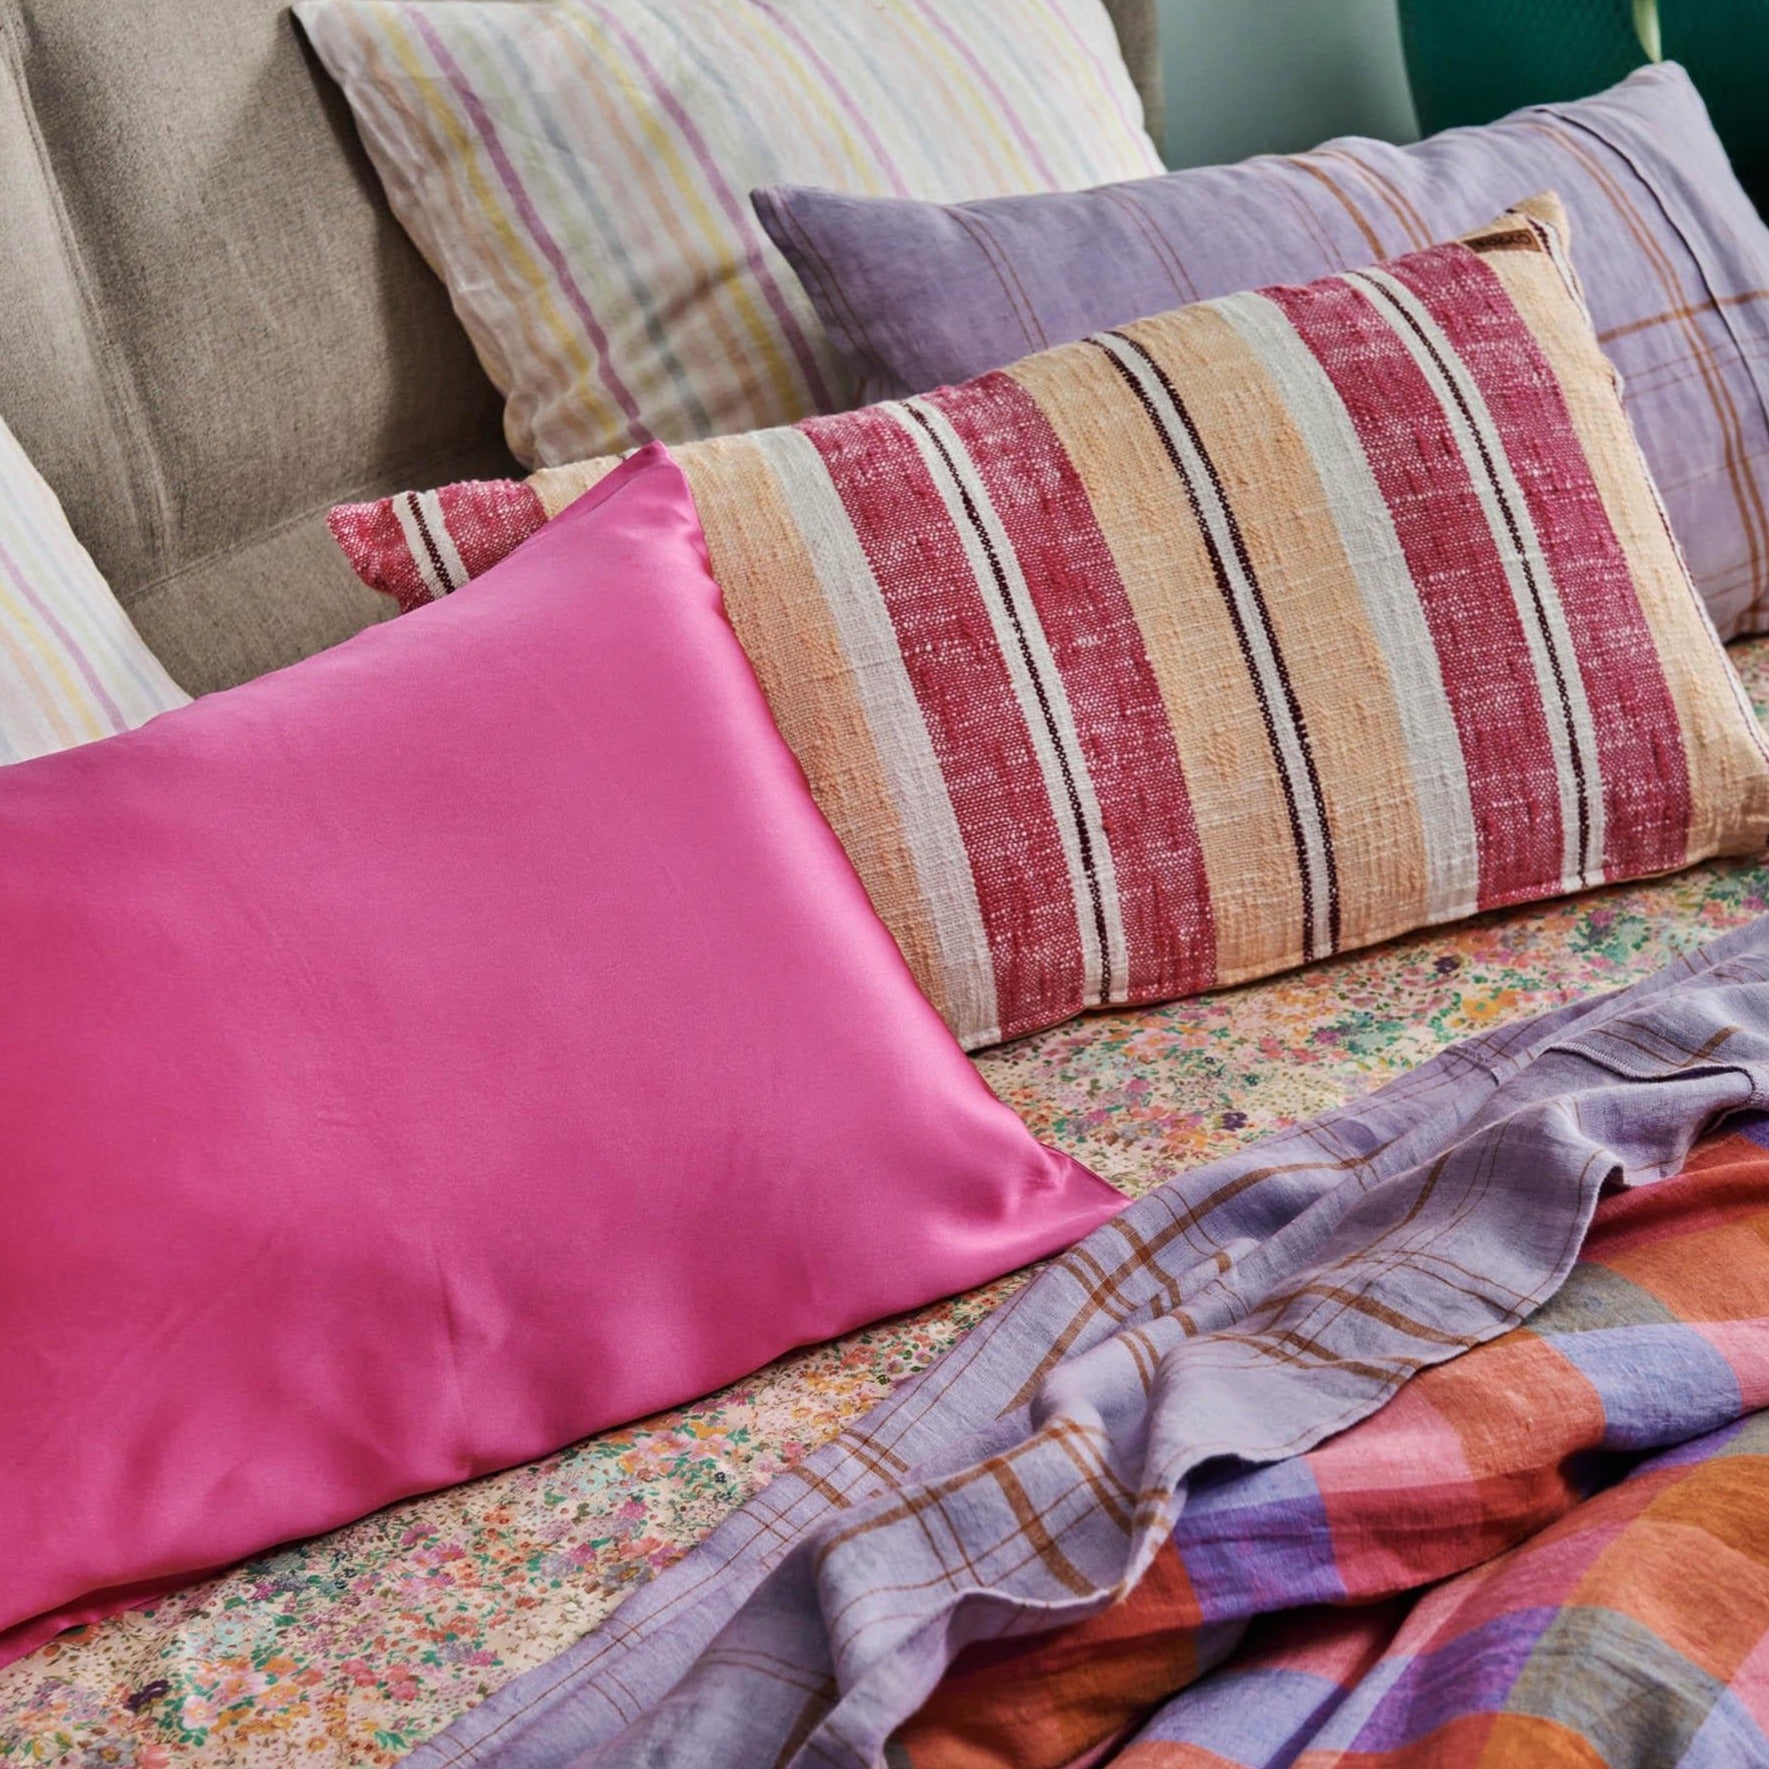 Silk Pillowcase - Perfect Pink